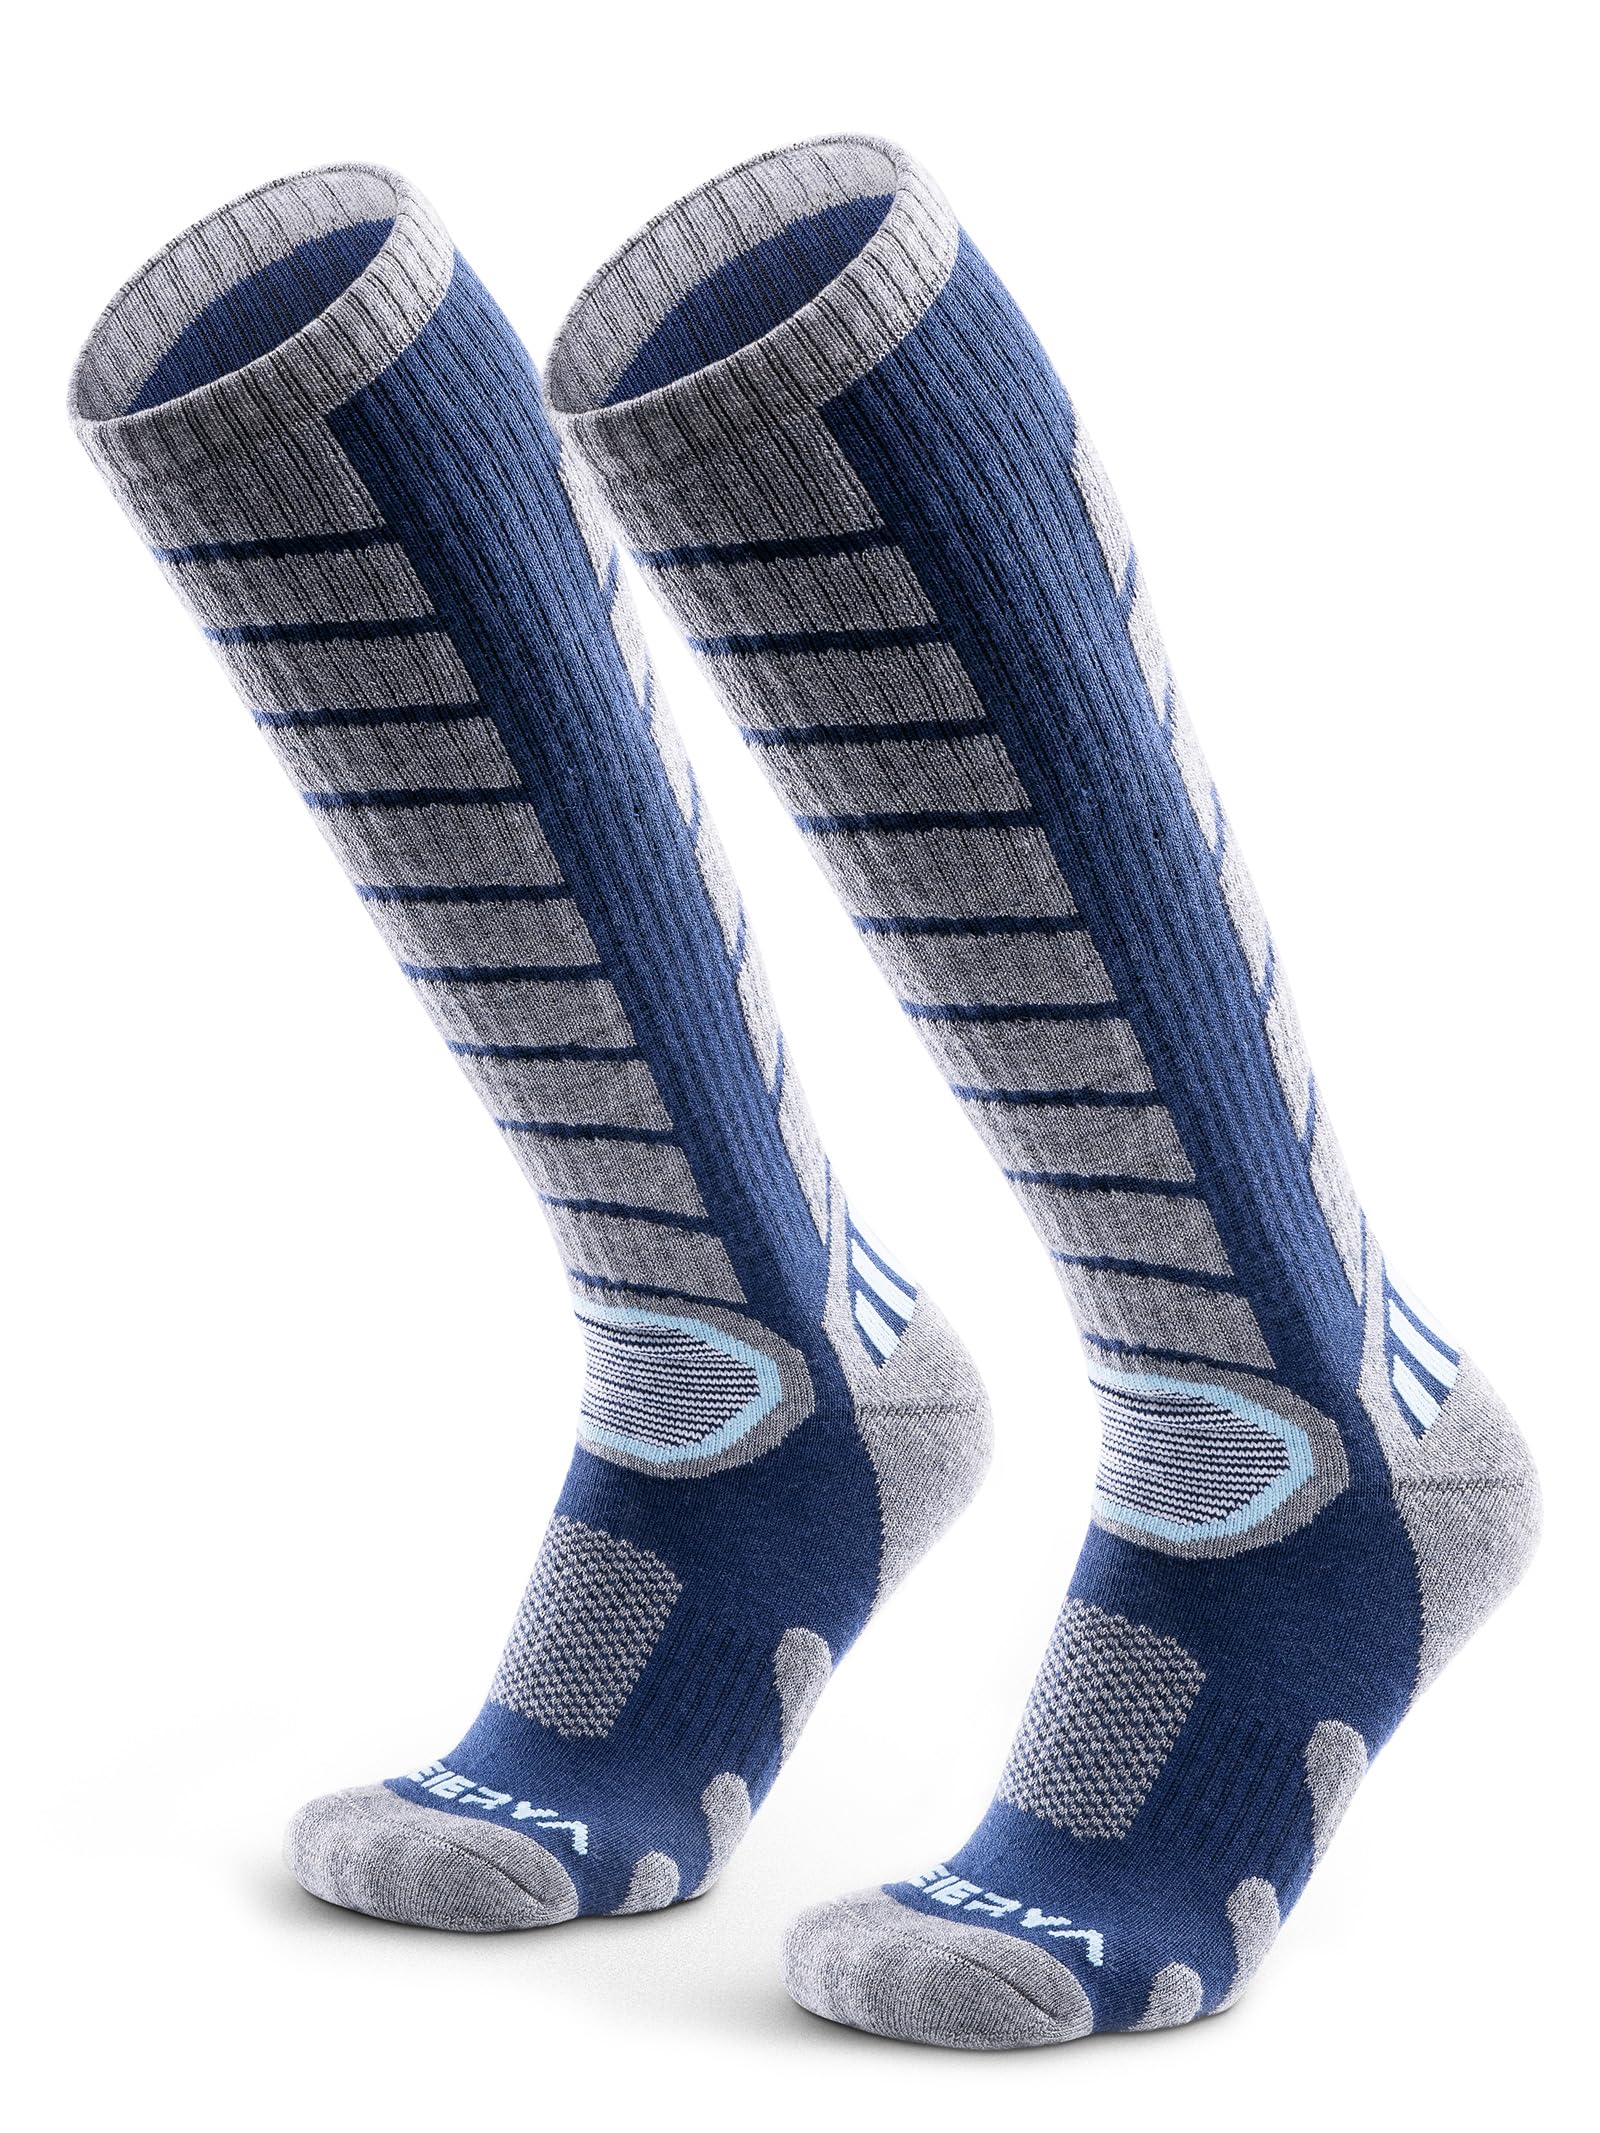 WEIERYA Merino Wool Ski Socks 2/3 Pairs Pack for Skiing, Snowboarding, Outdoor Sports Performance Socks